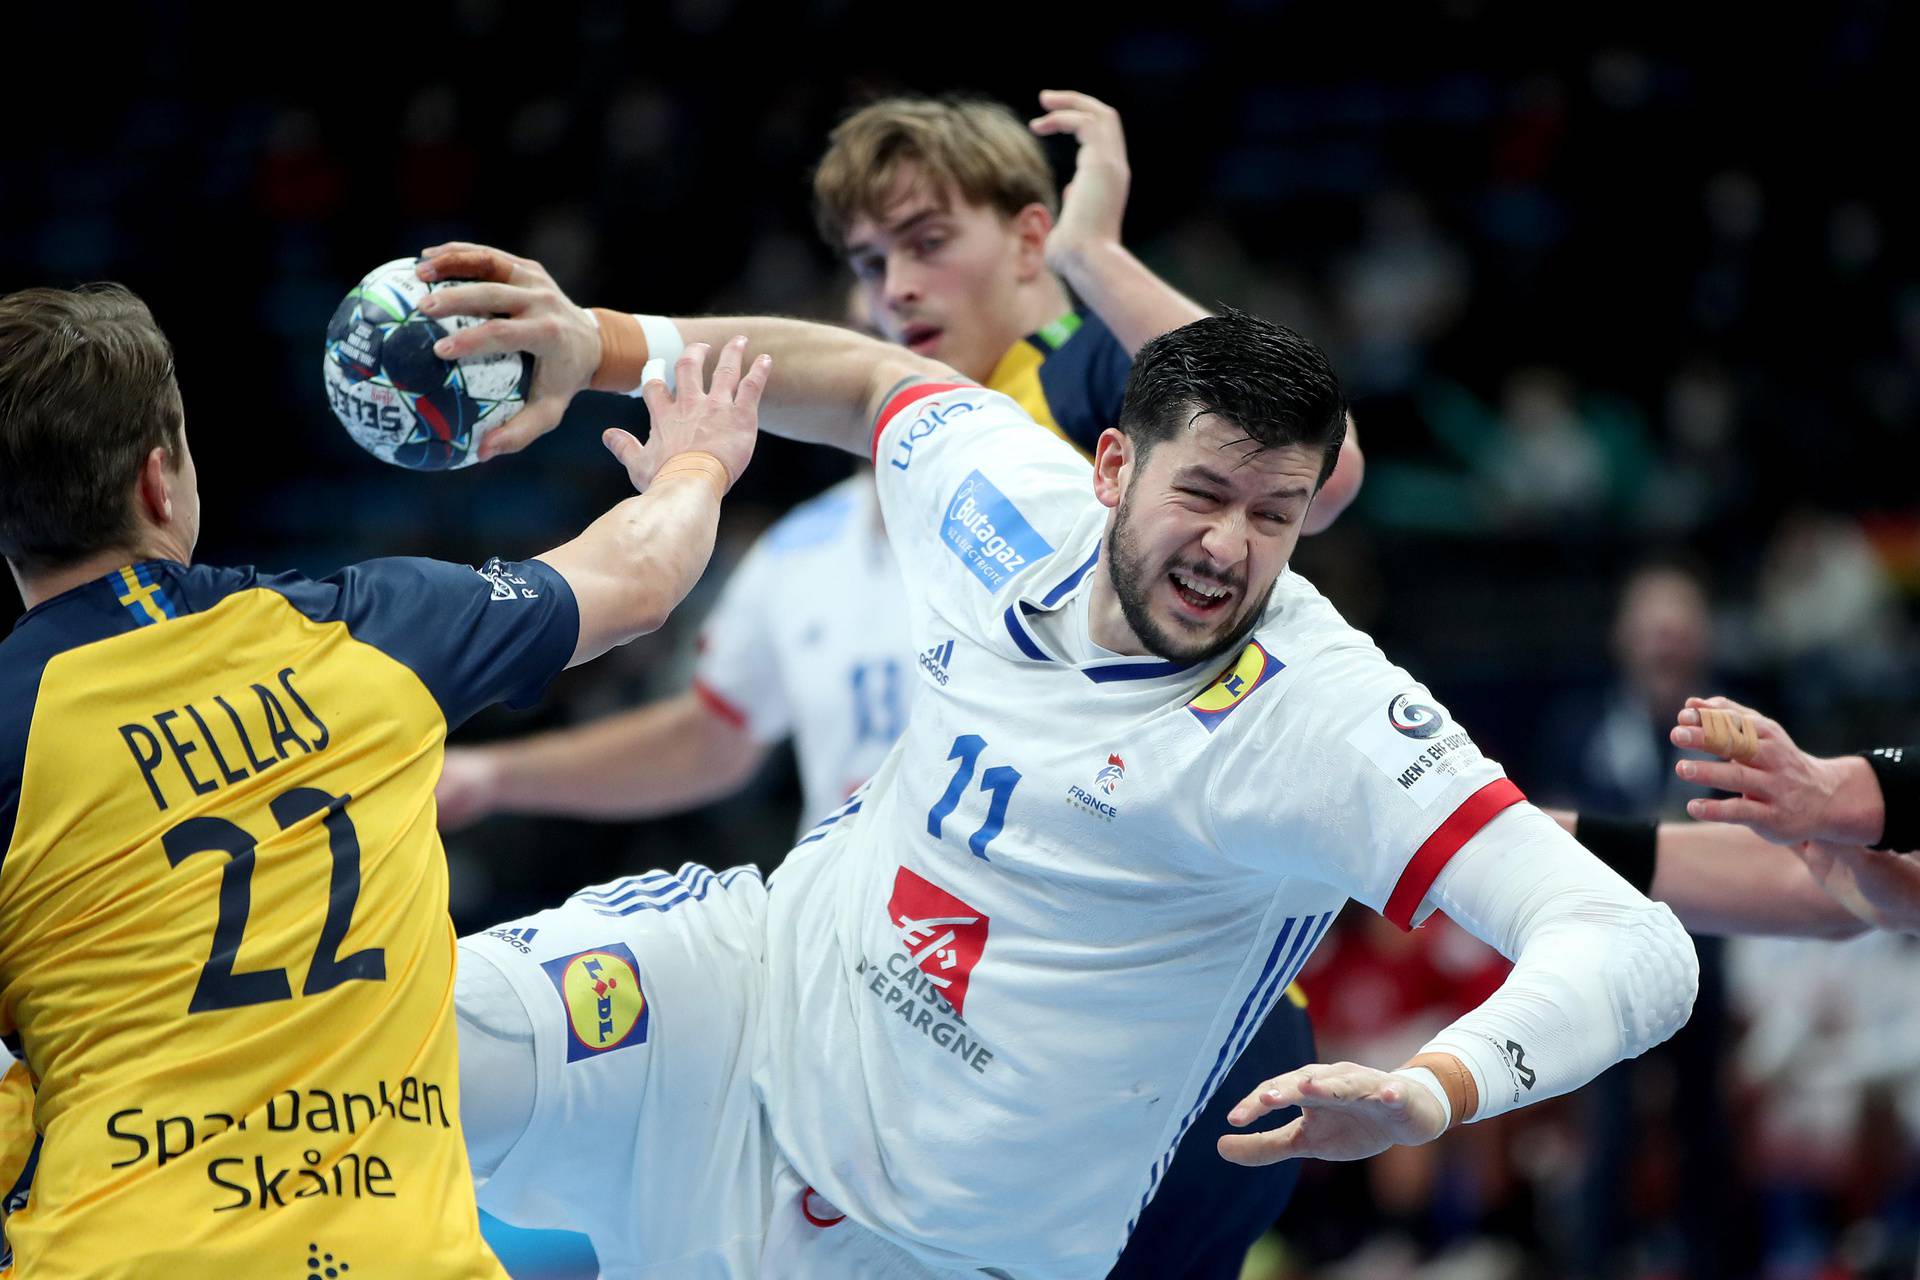 Budimpešta: EHF Europsko prvenstvo: Francuska - Švedska